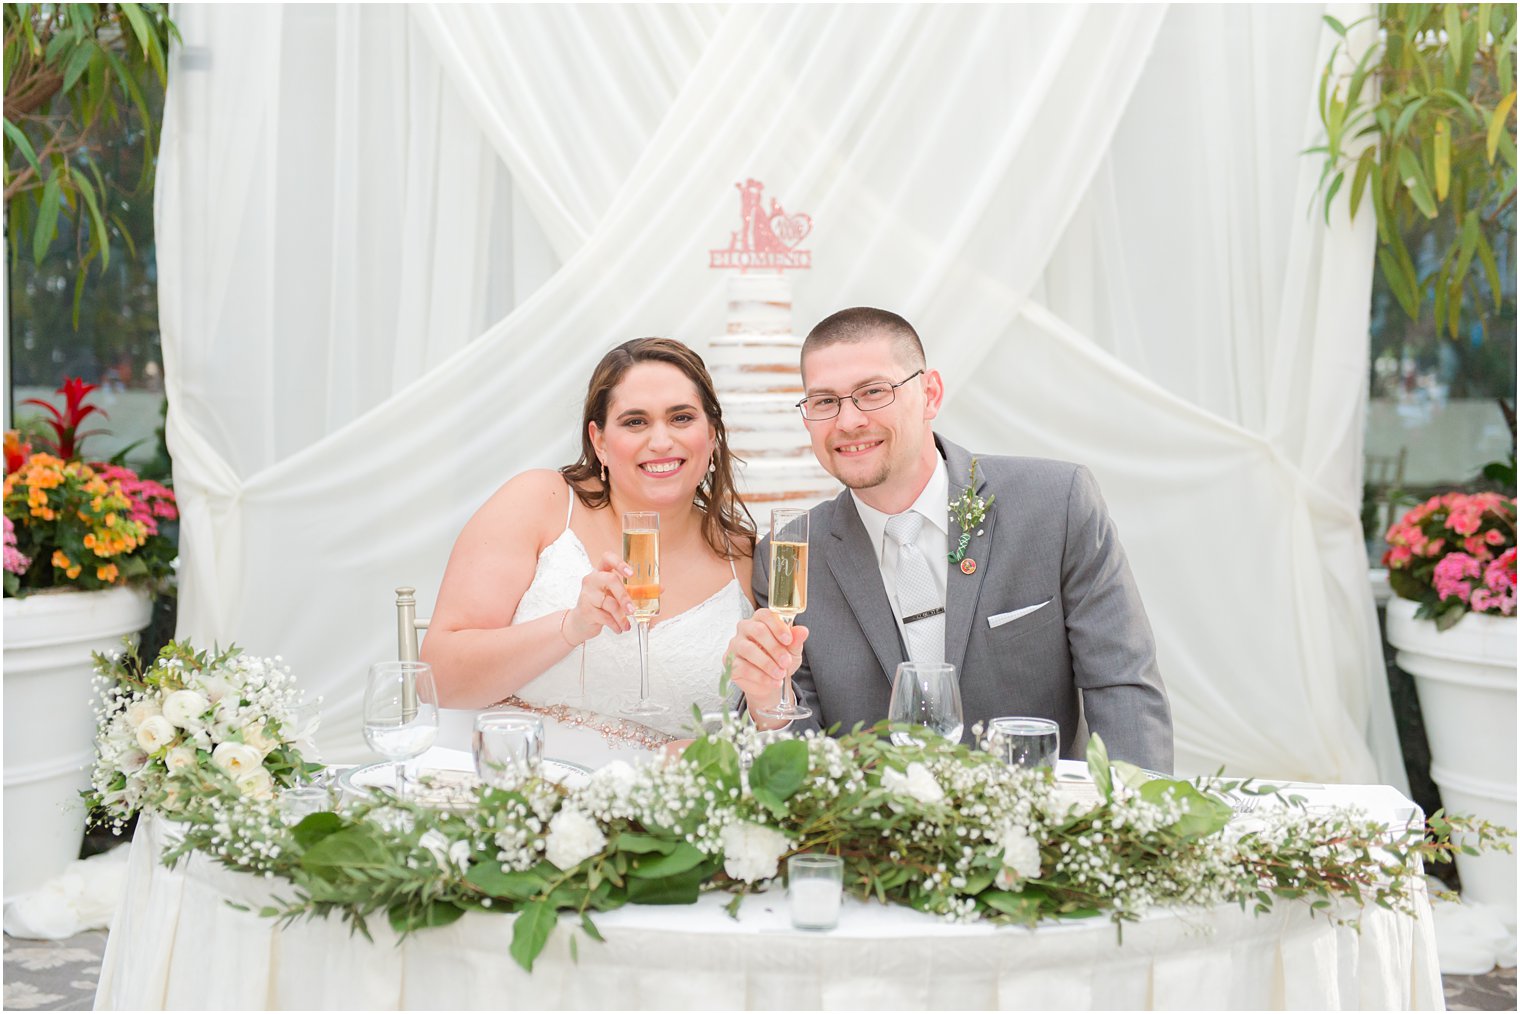 newlyweds toast champagne during NJ wedding reception at The Madison Hotel